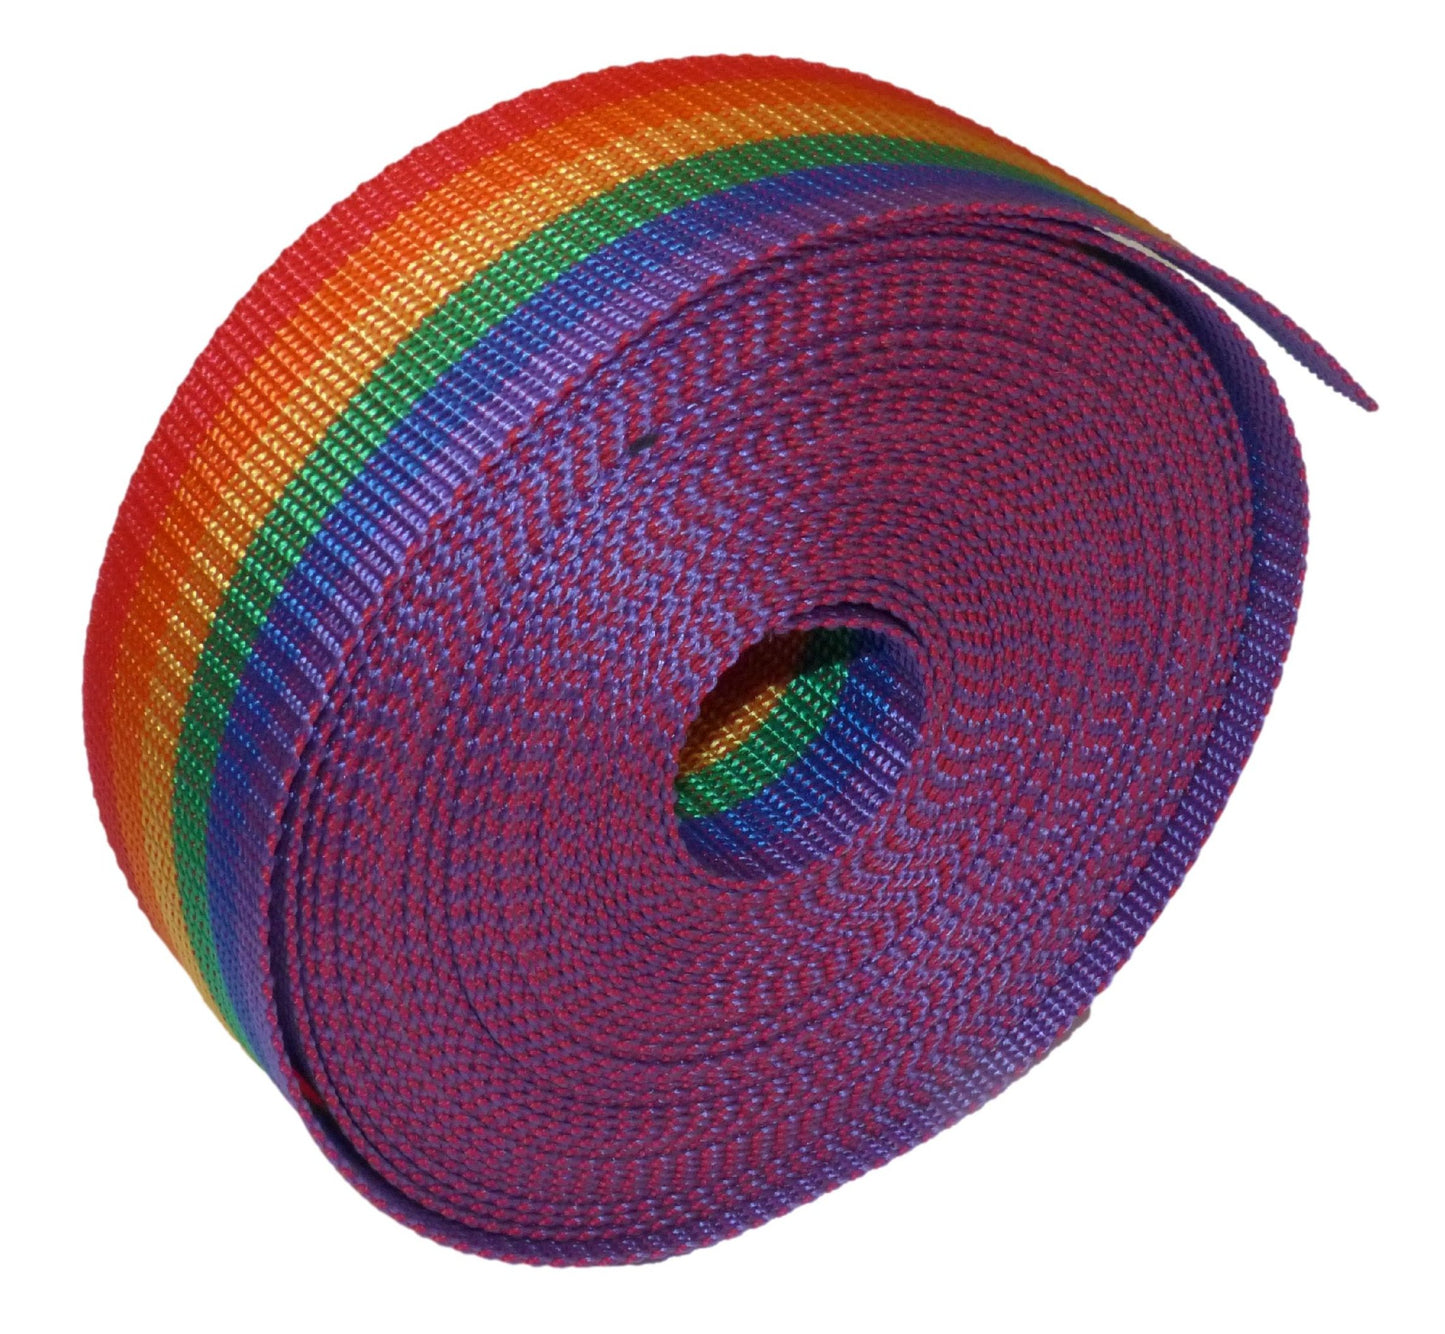 Benristraps 50mm (2") Polypropylene Webbing, 10 Metre (32') Roll in rainbow